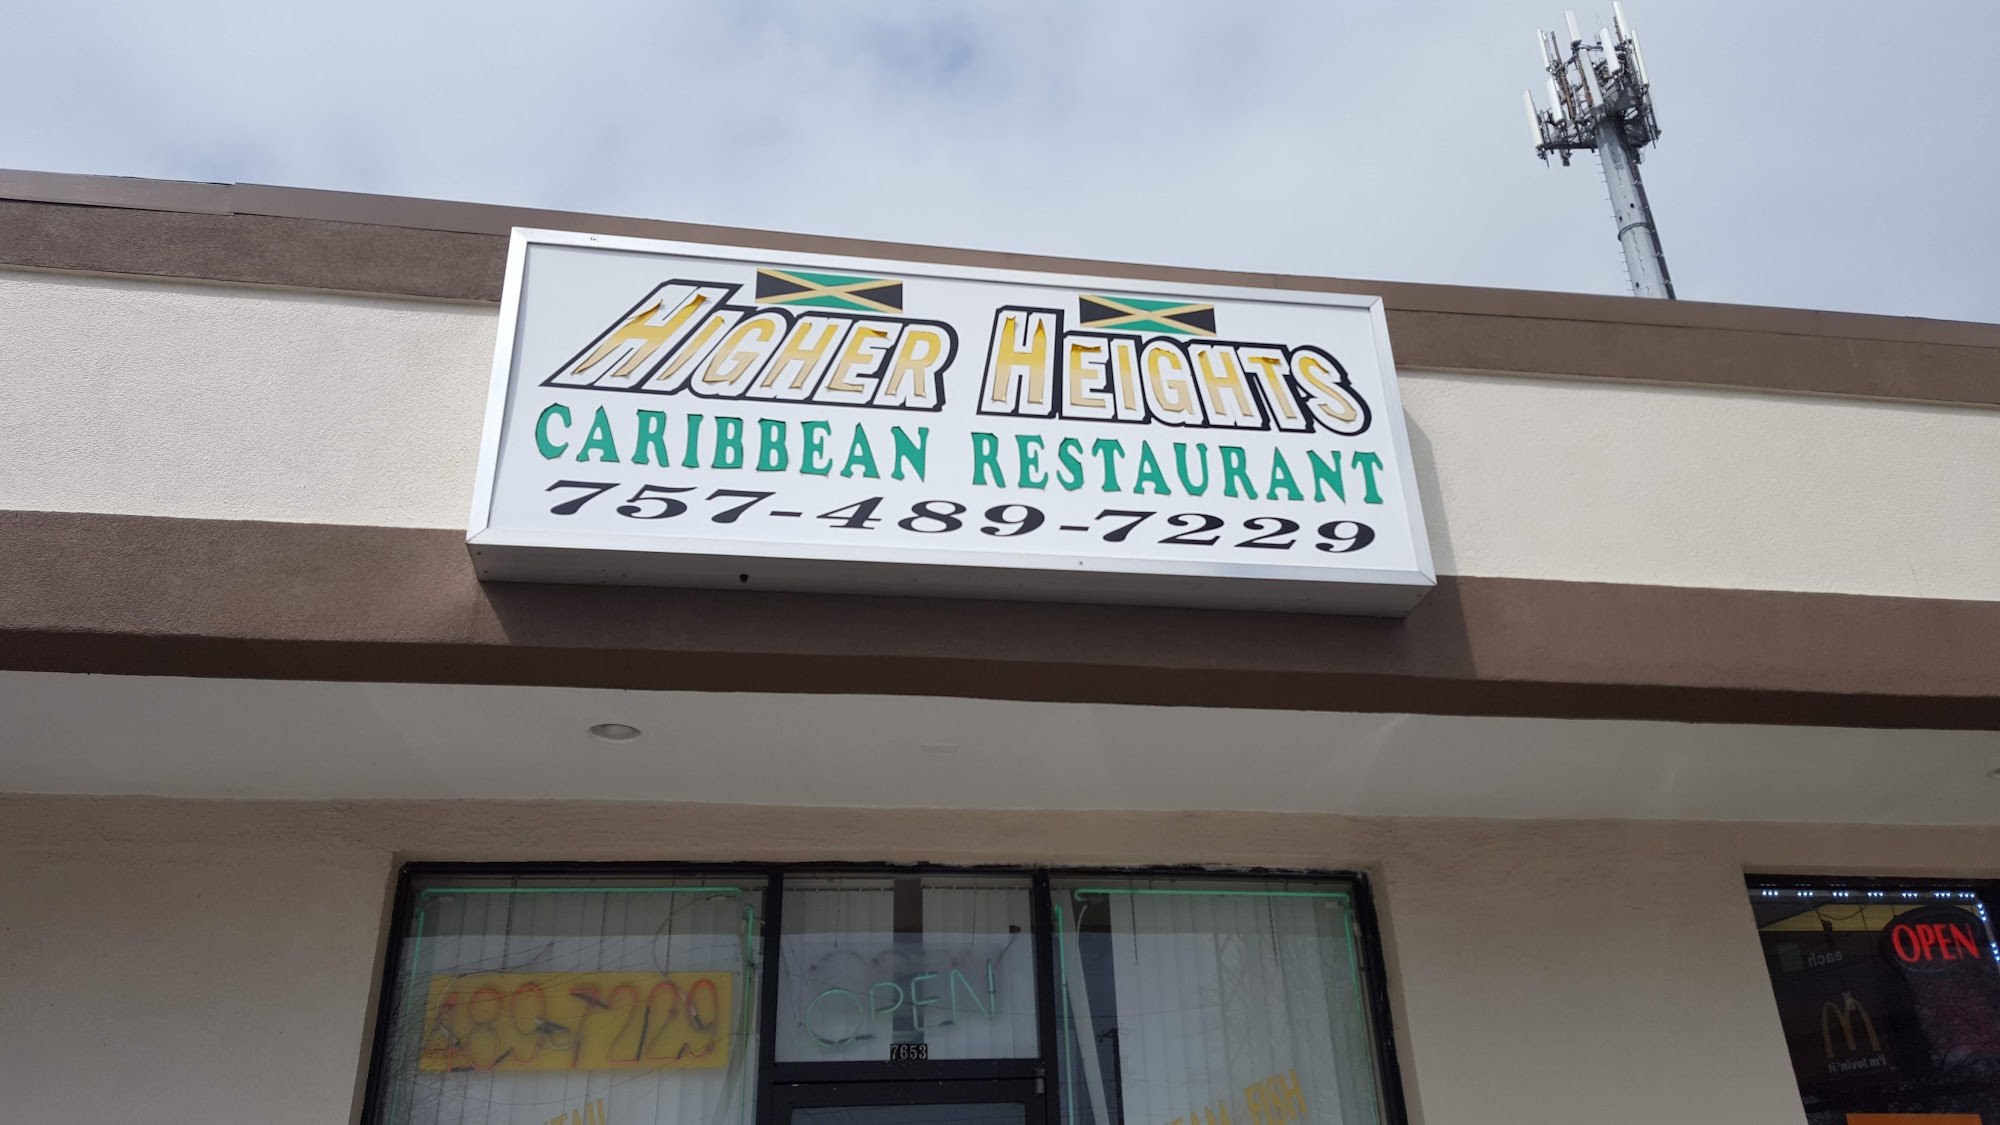 Higher Heights Caribbean Restaurant